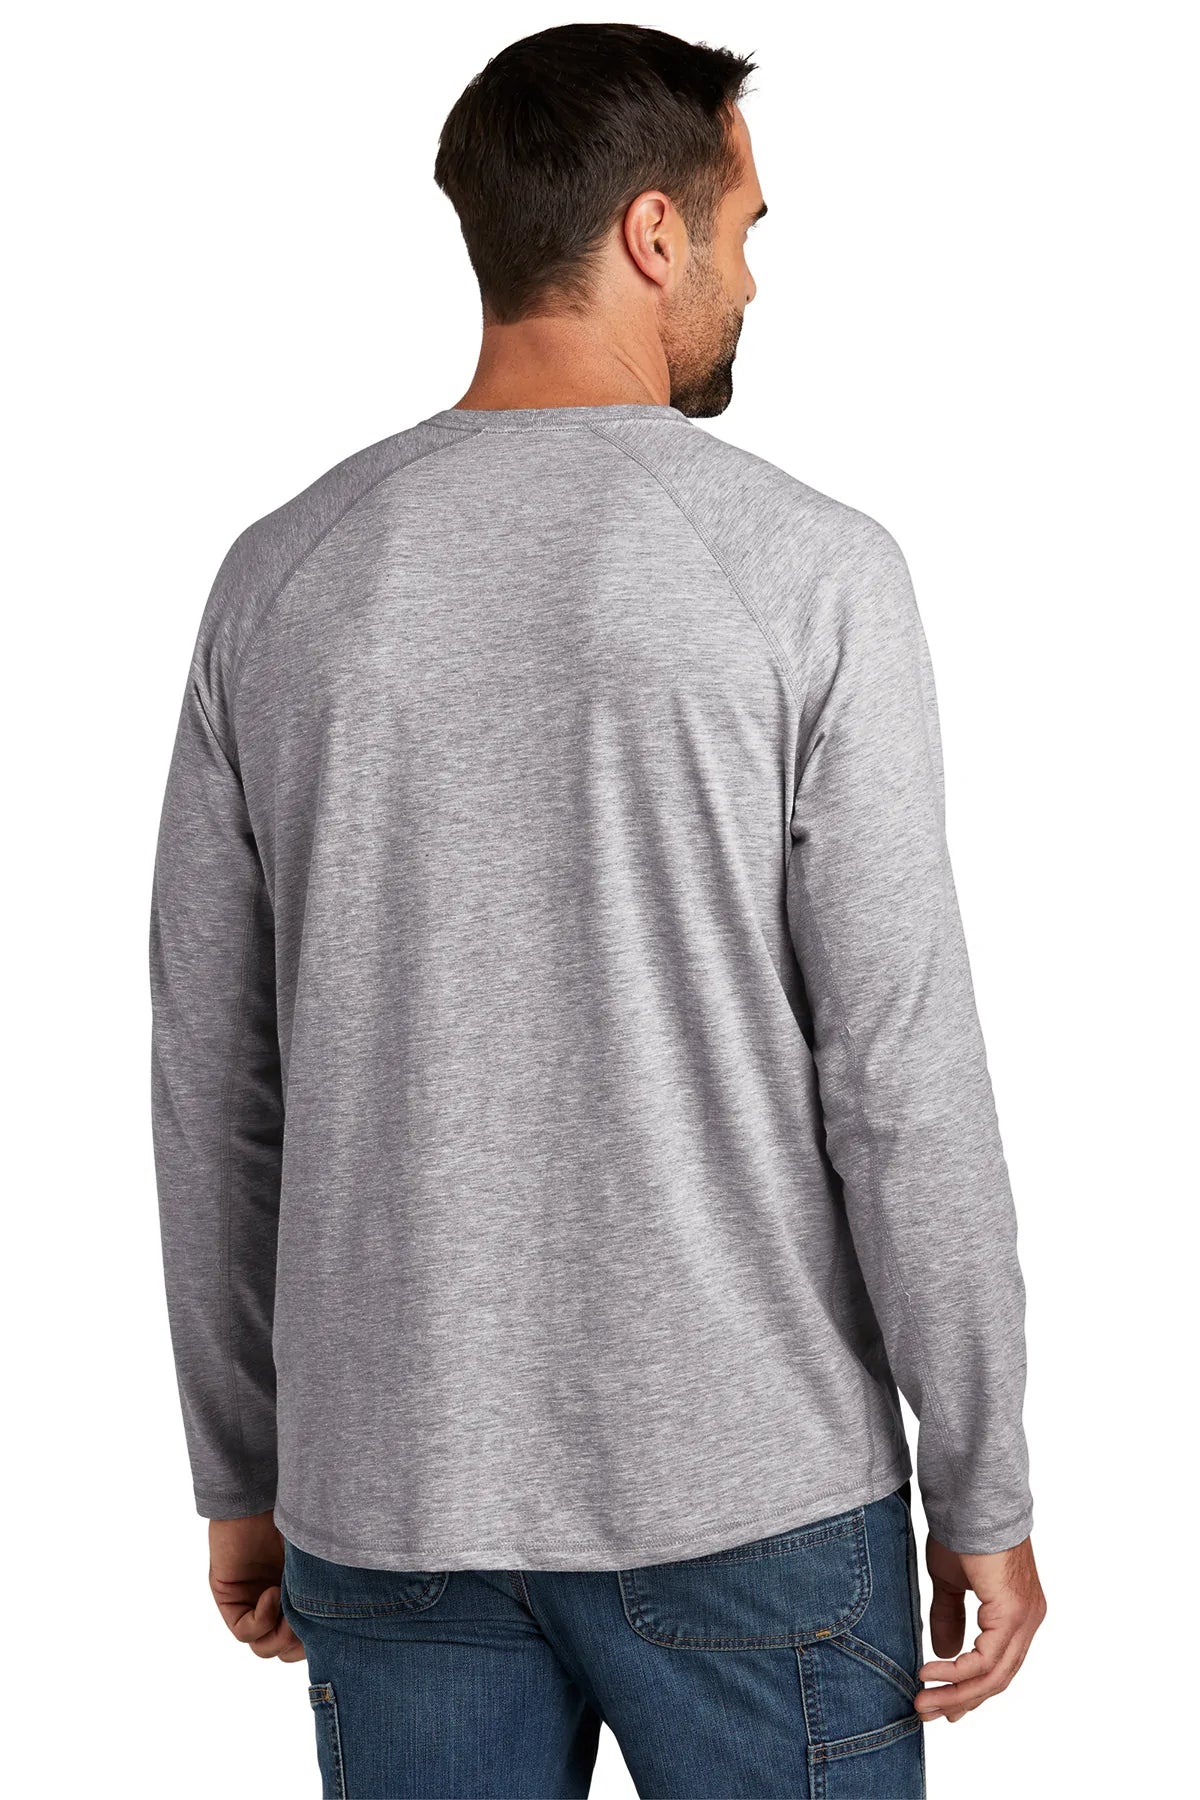 Branded Carhartt Force Long Sleeve Pocket T-Shirt Heather Grey